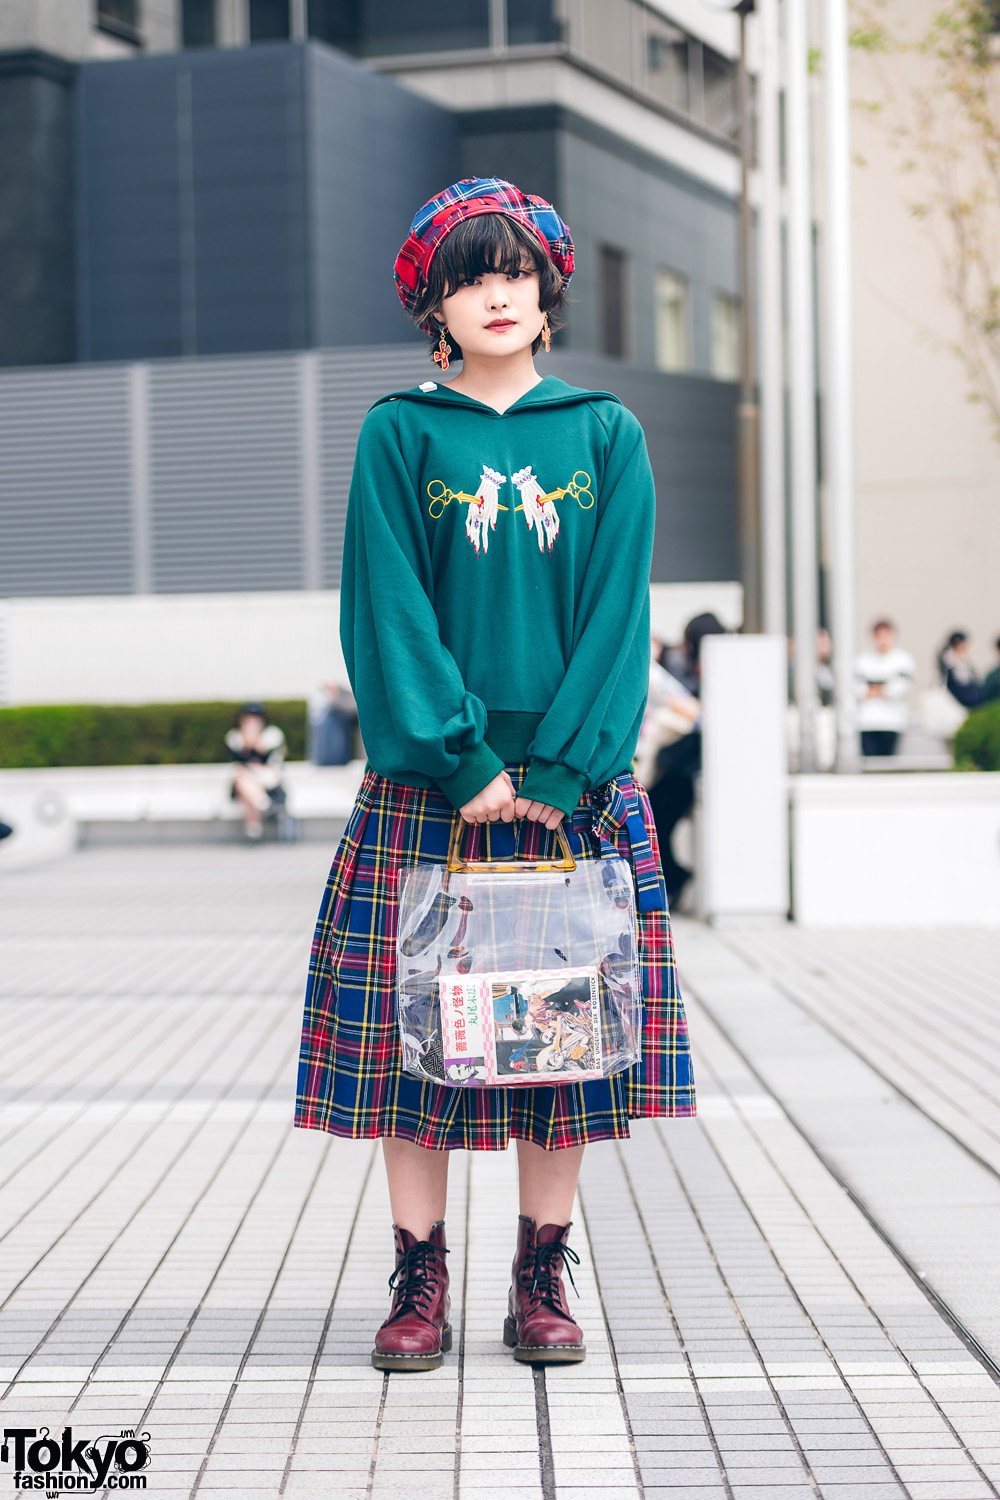 HEIHEI Japanese Street Style w/ Scissor Hands Sweater, Plaid Skirt, Vintage Bag, Plaid Beret & Dr. Martens Boots